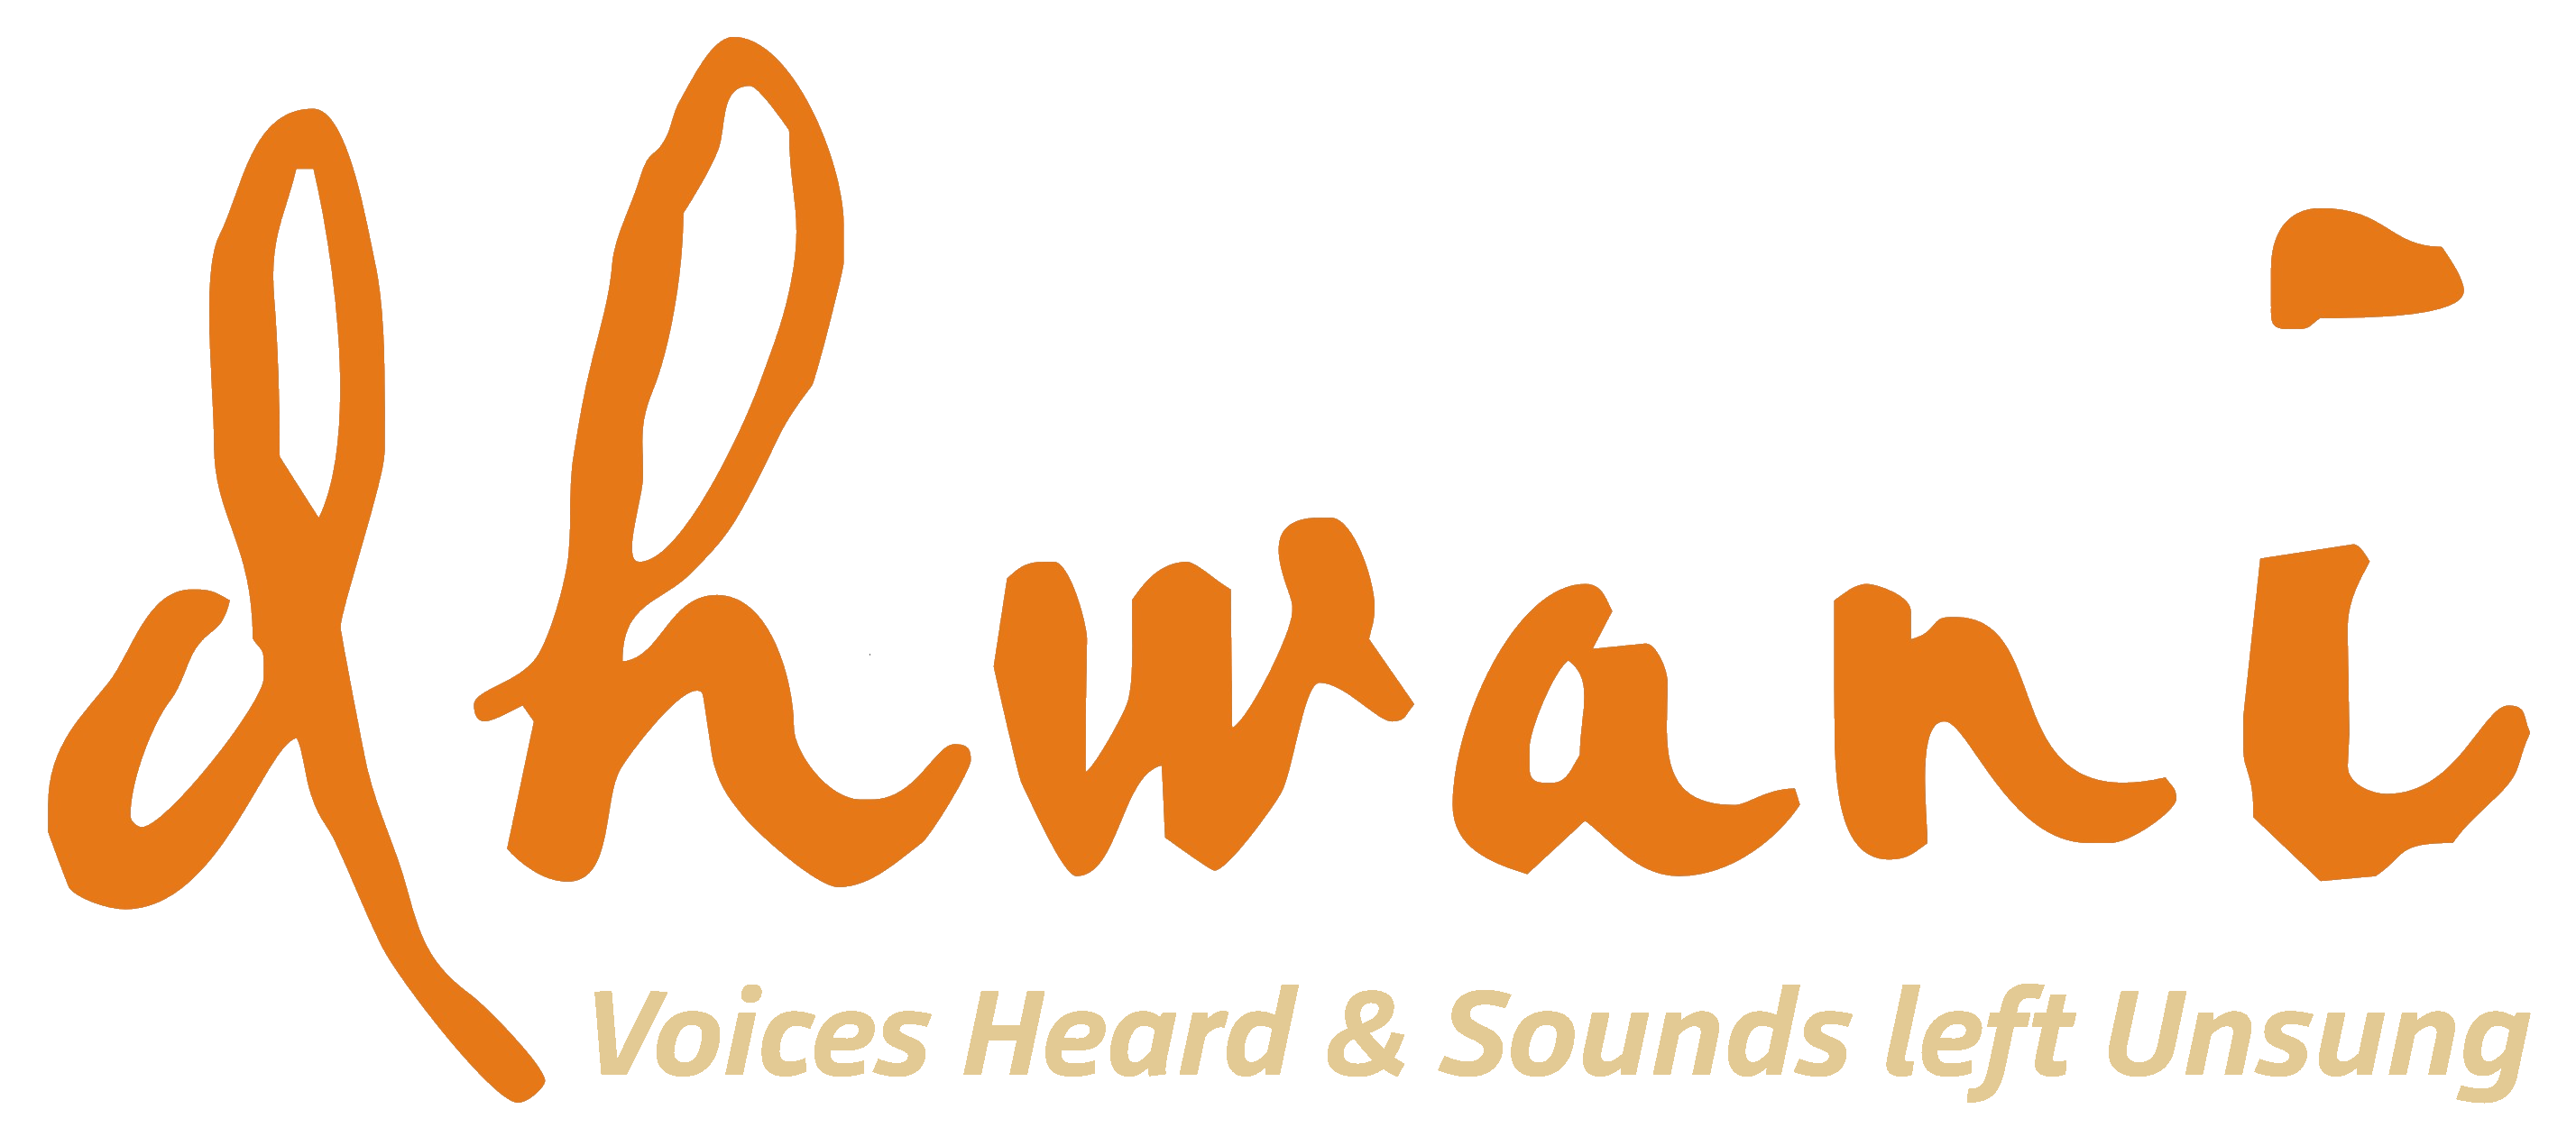 Dhwani logo